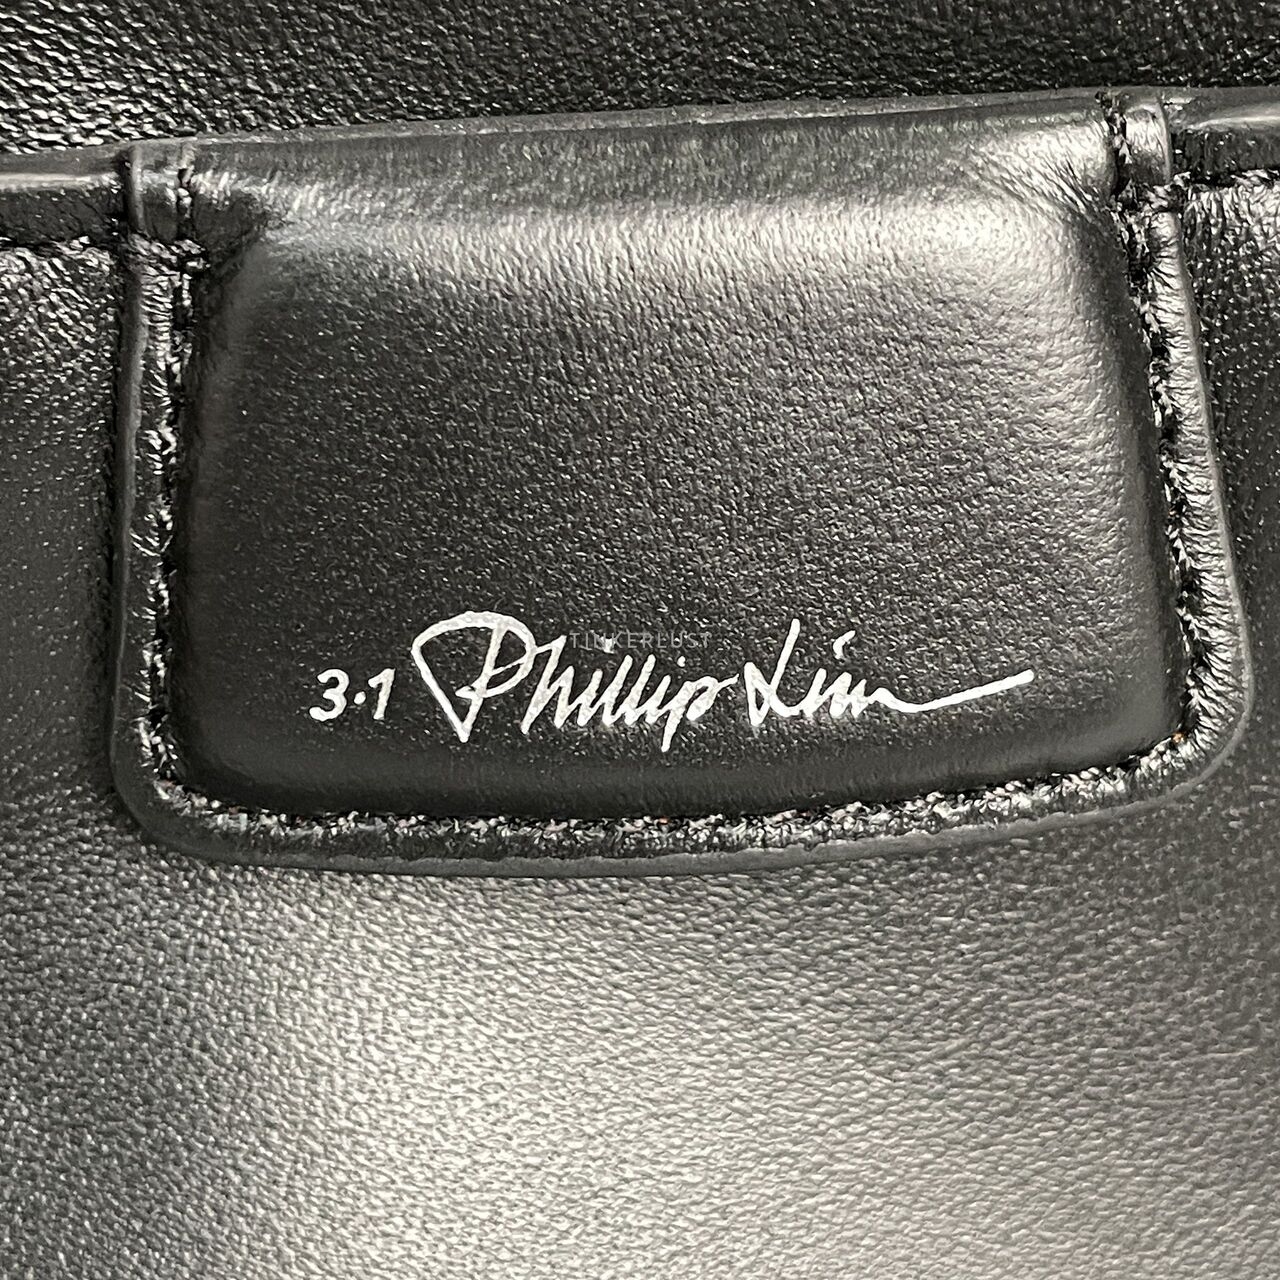 3.1 Phillip Lim Pashli Moto Black Satchel Bag